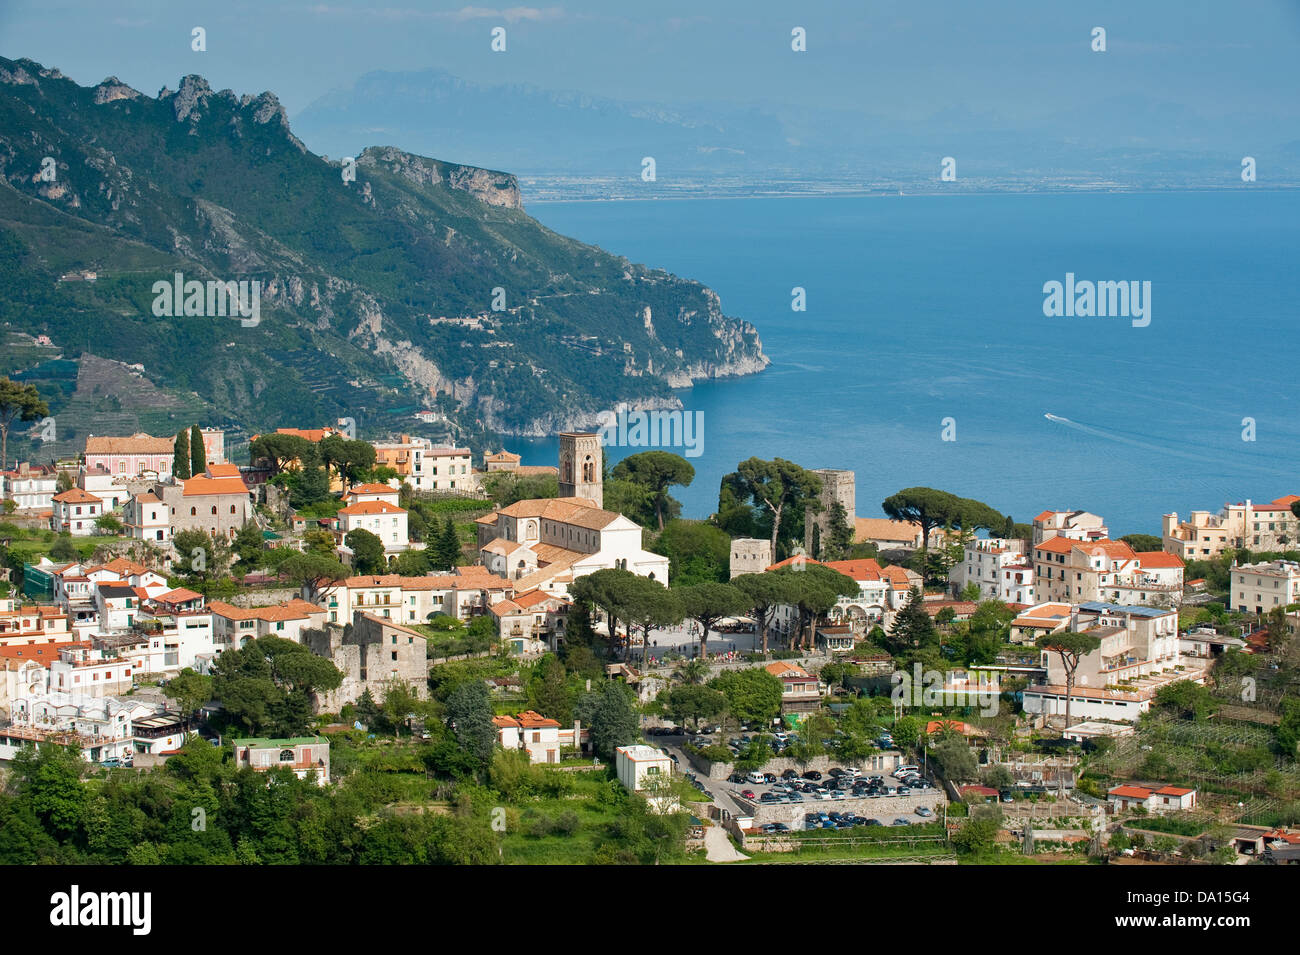 Village of Ravello, on the Unesco World Heritage listed Amalfi Coast, Italy Stock Photo